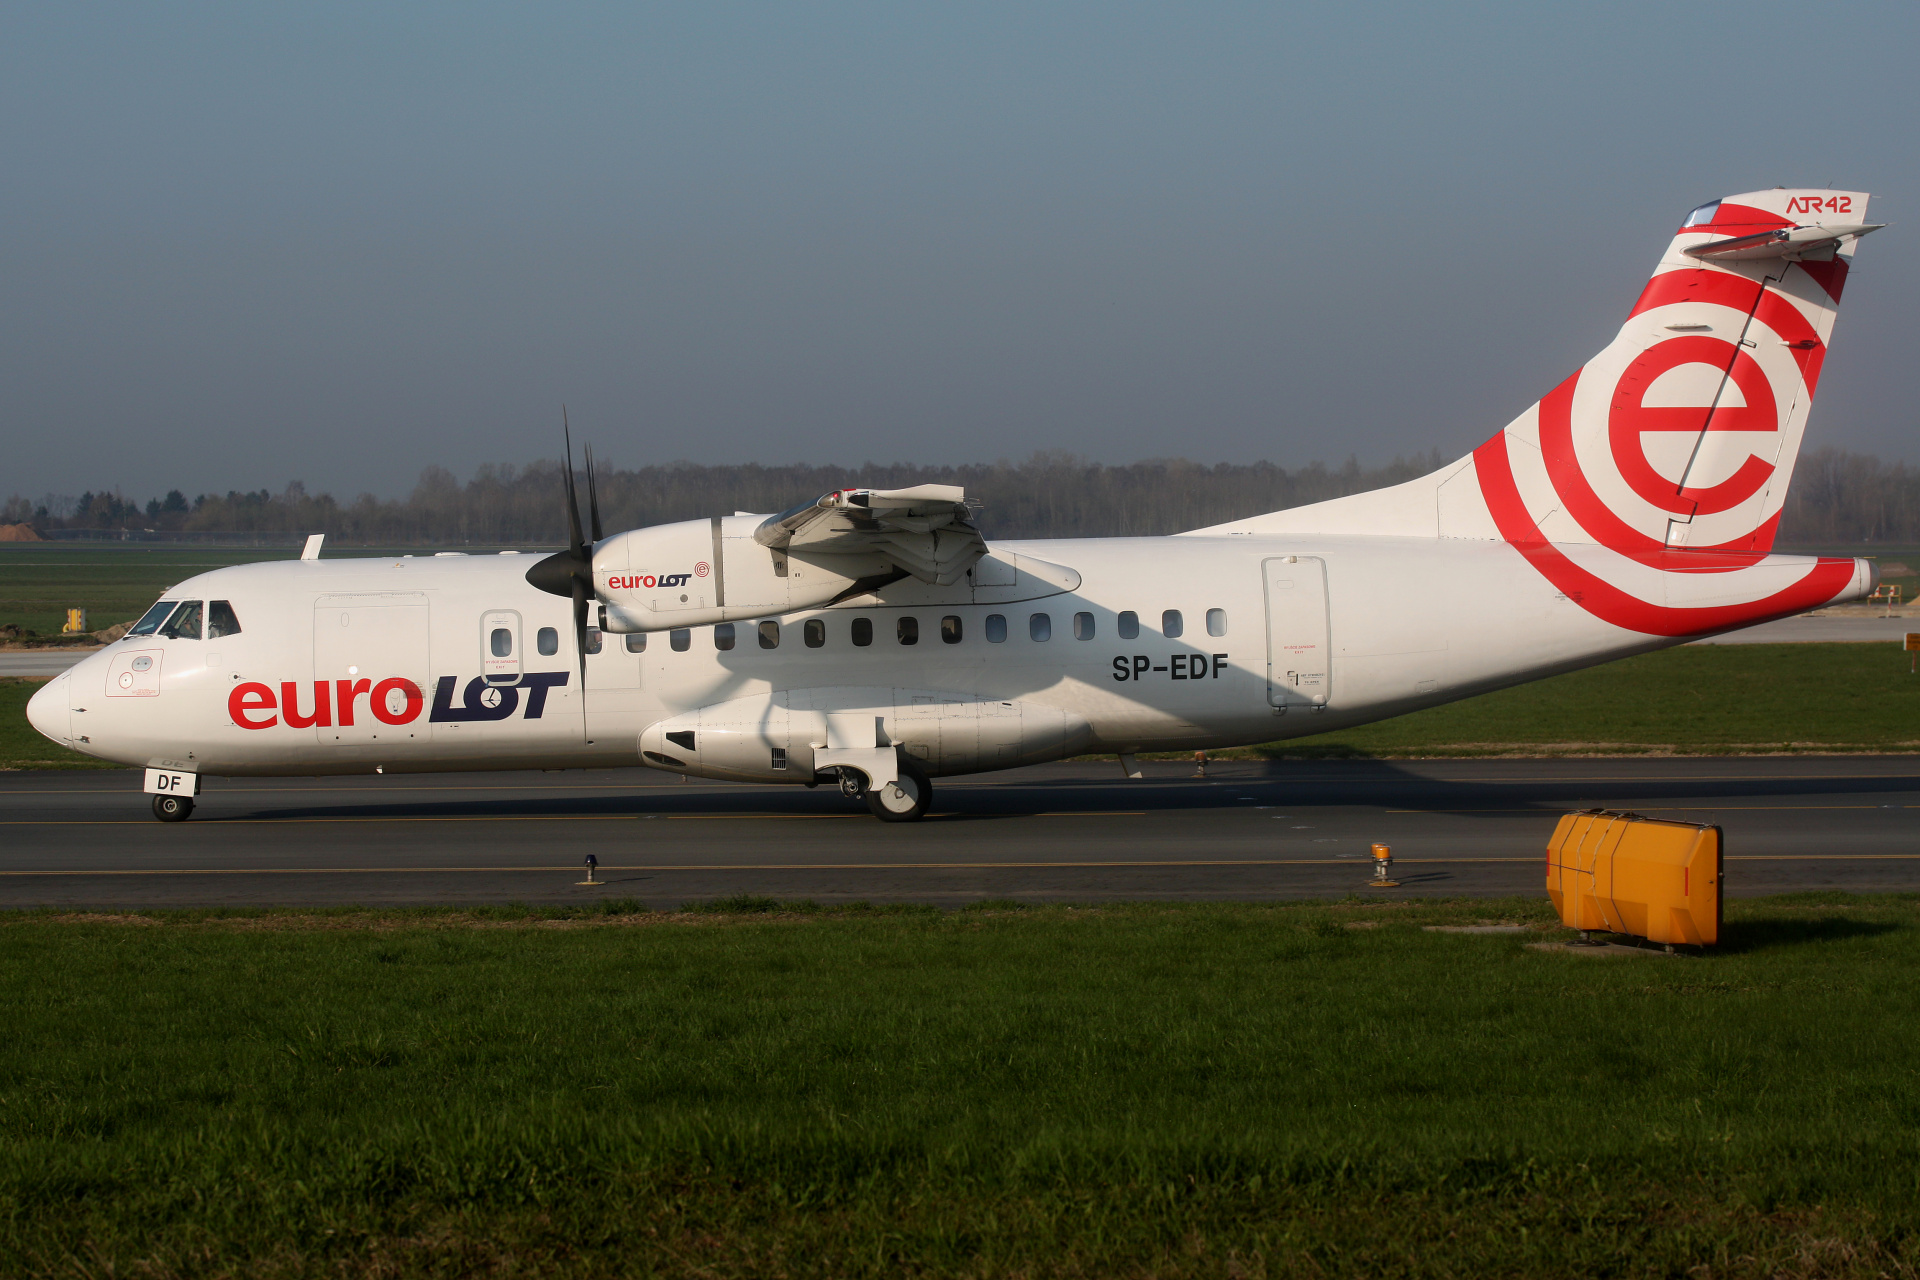 SP-EDF (Samoloty » Spotting na EPWA » ATR 42 » EuroLOT)